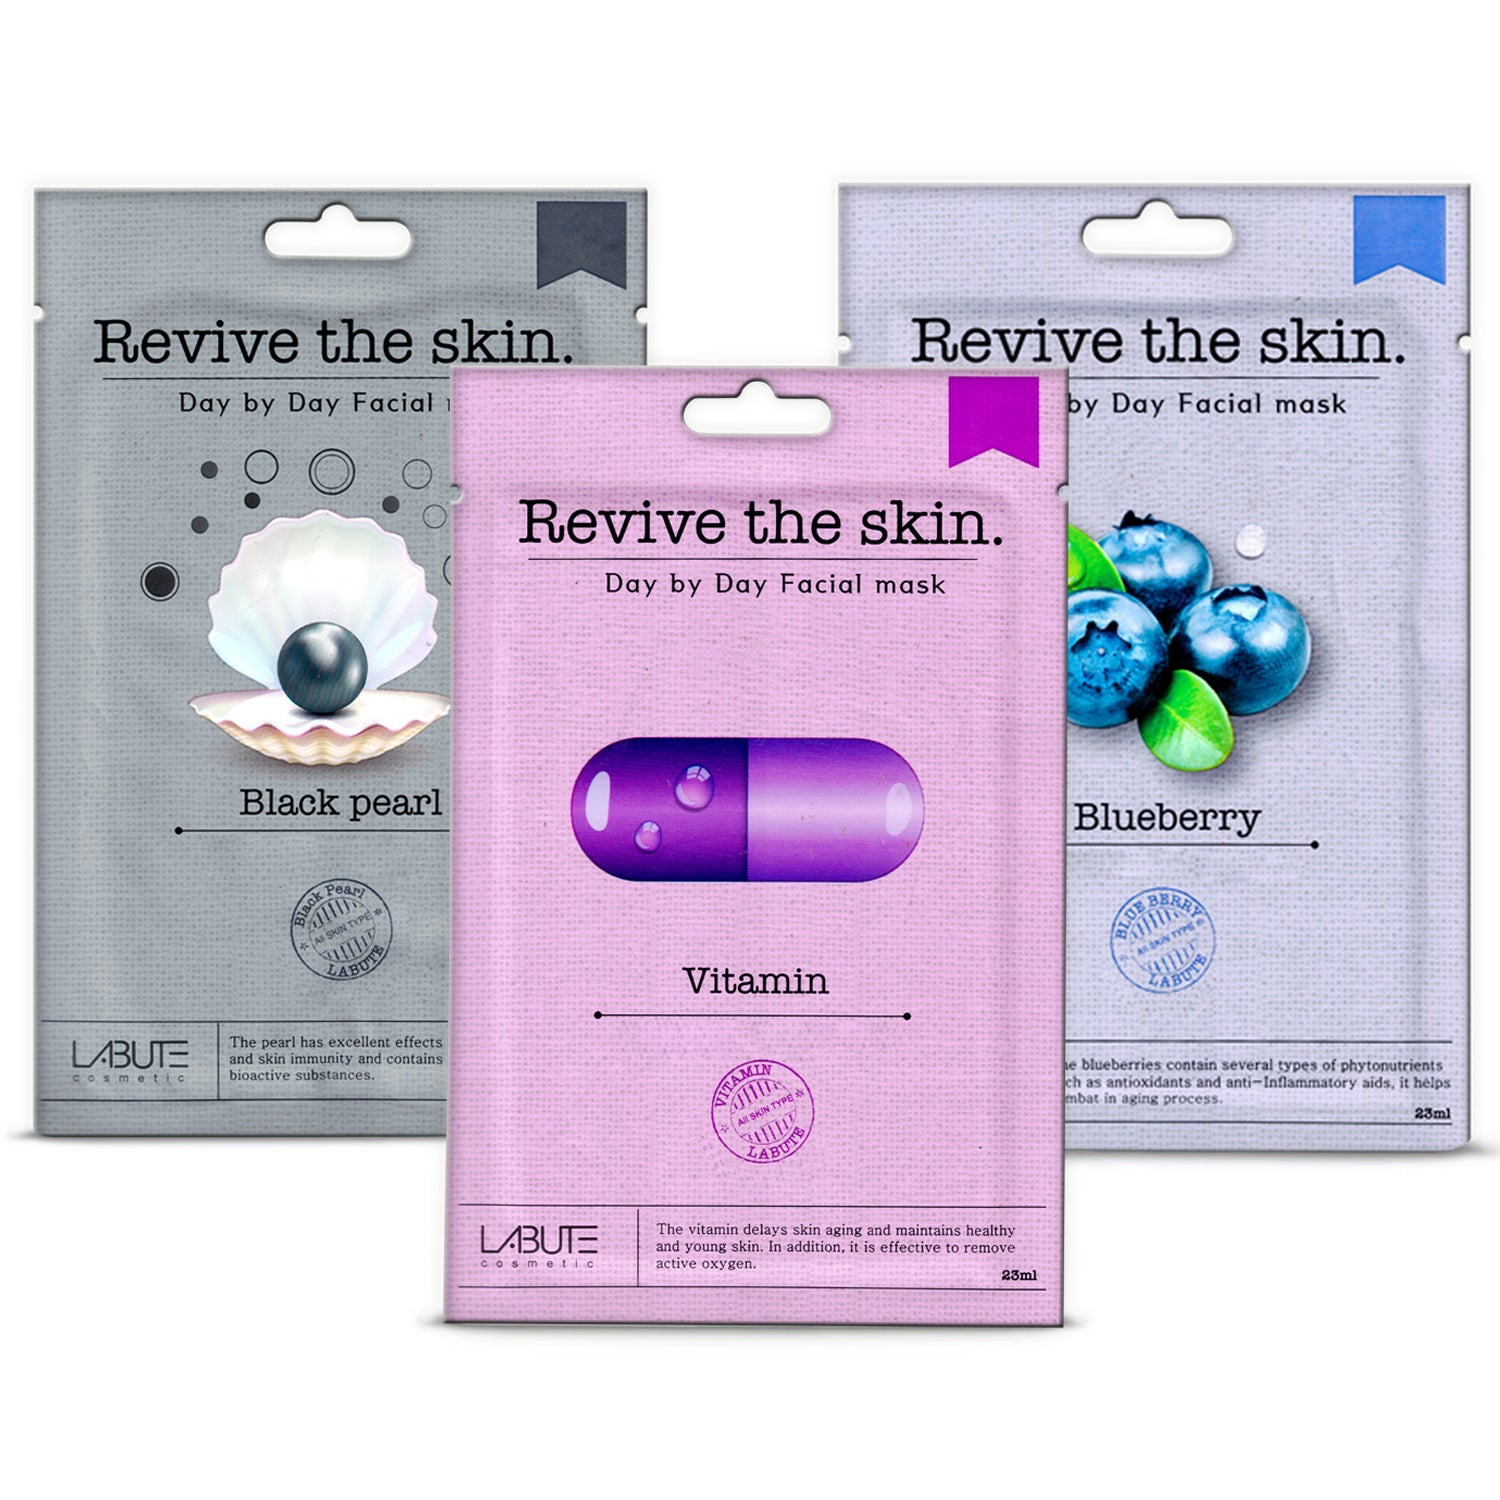 ECONBIO ROOTS Labute Korean Black Pearl, Vitamin & Blueberry Facial Sheet Mask, 23ml (Pack of 3)